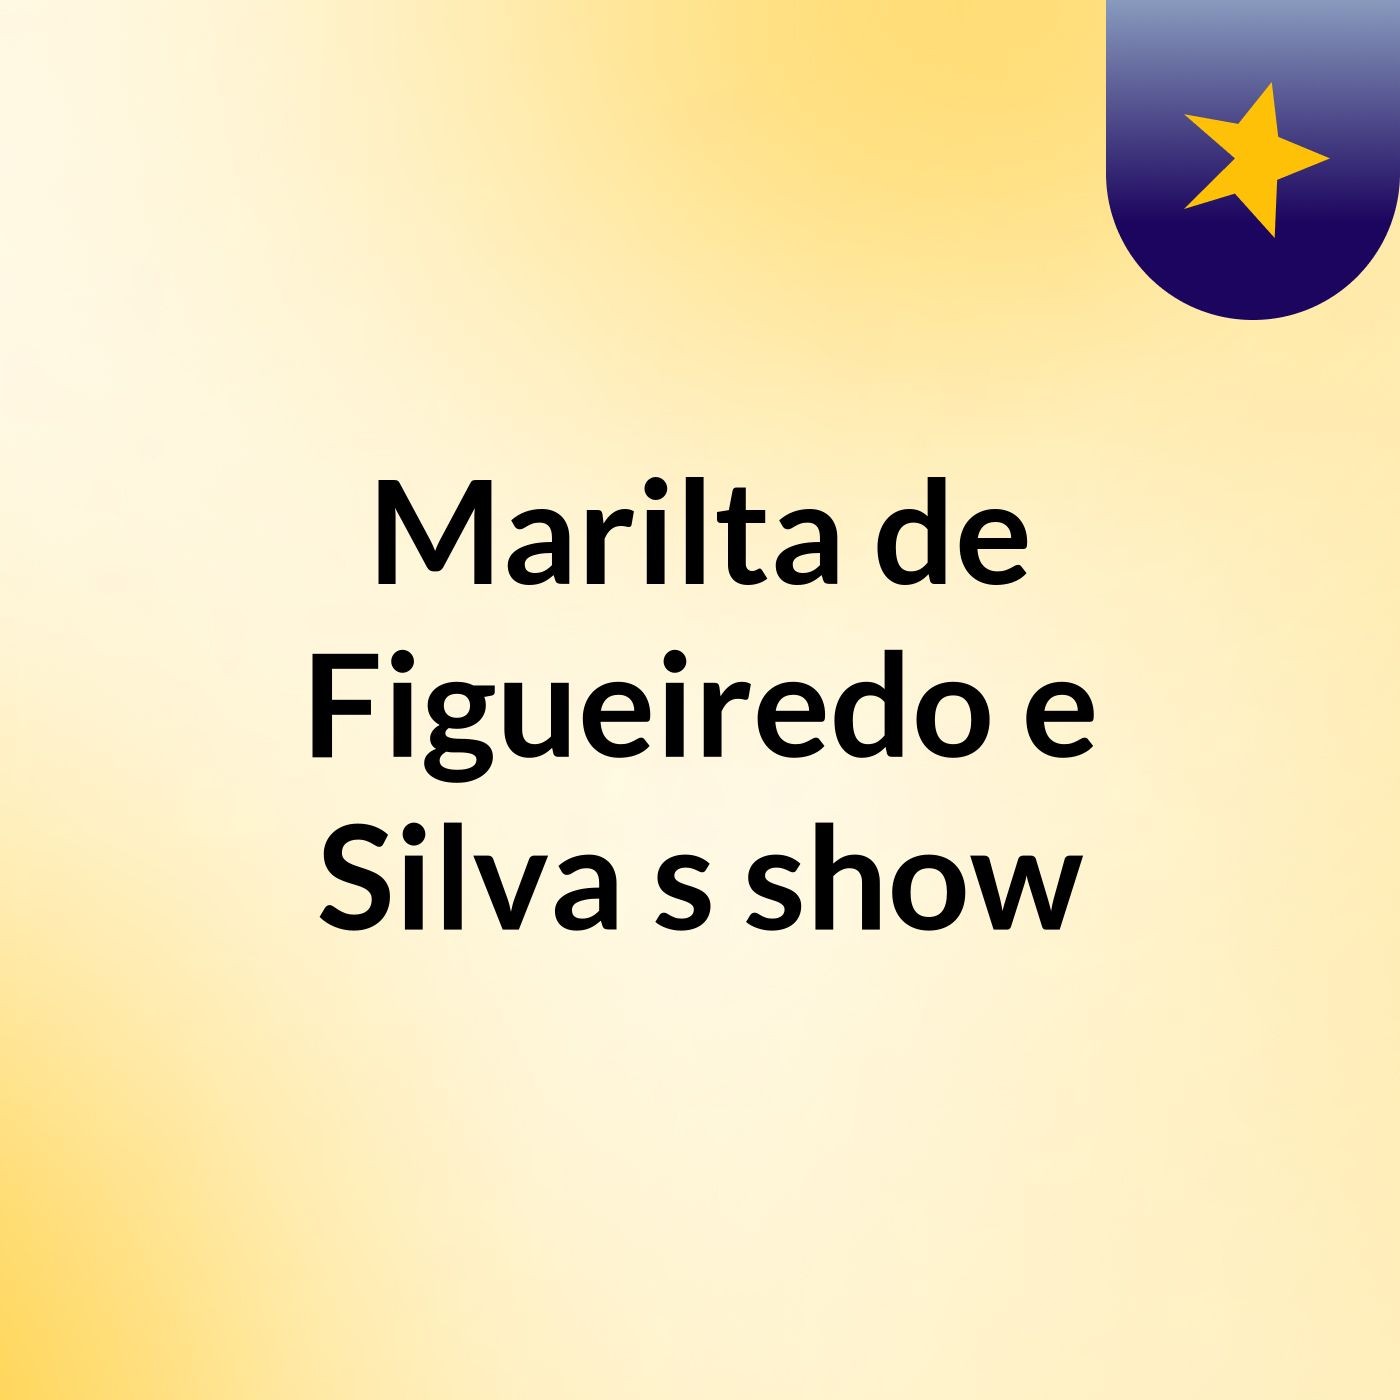 Marilta de Figueiredo e Silva's show